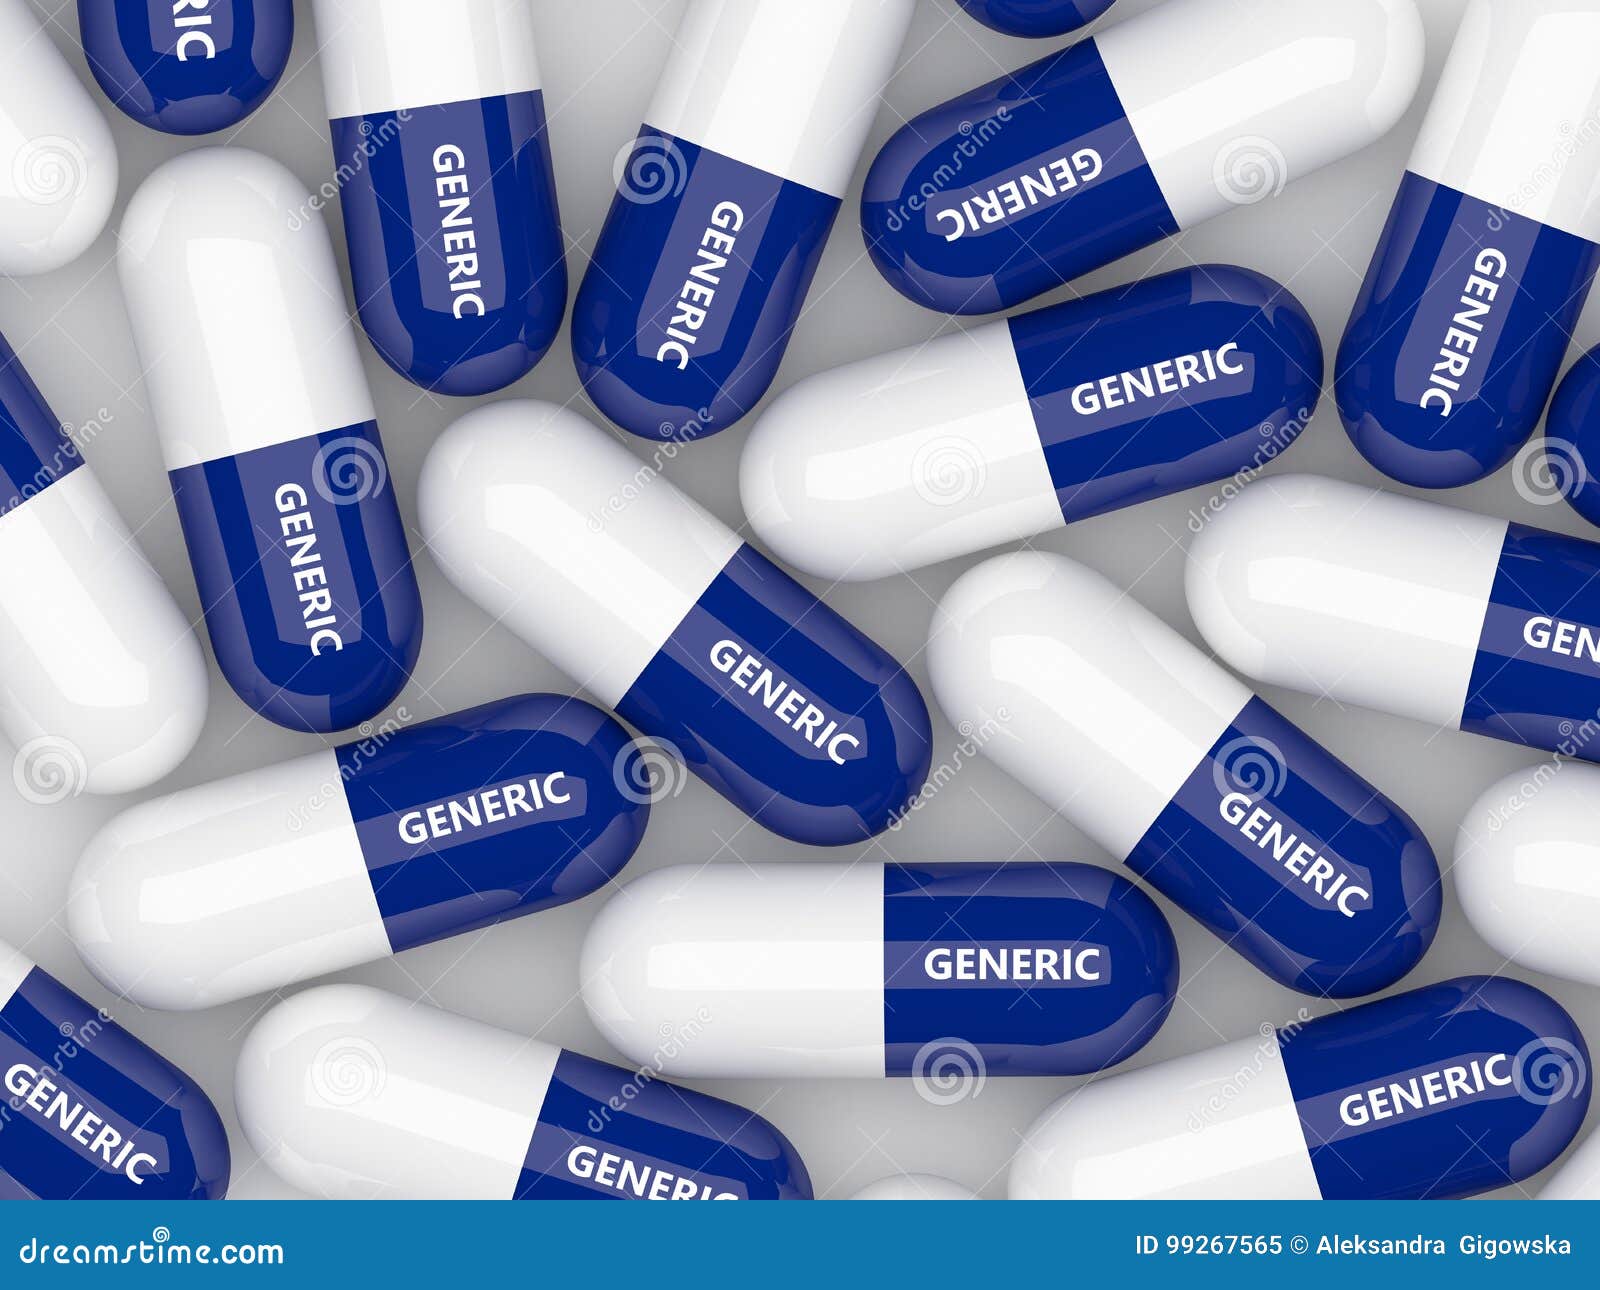 3d render of generic drug pills